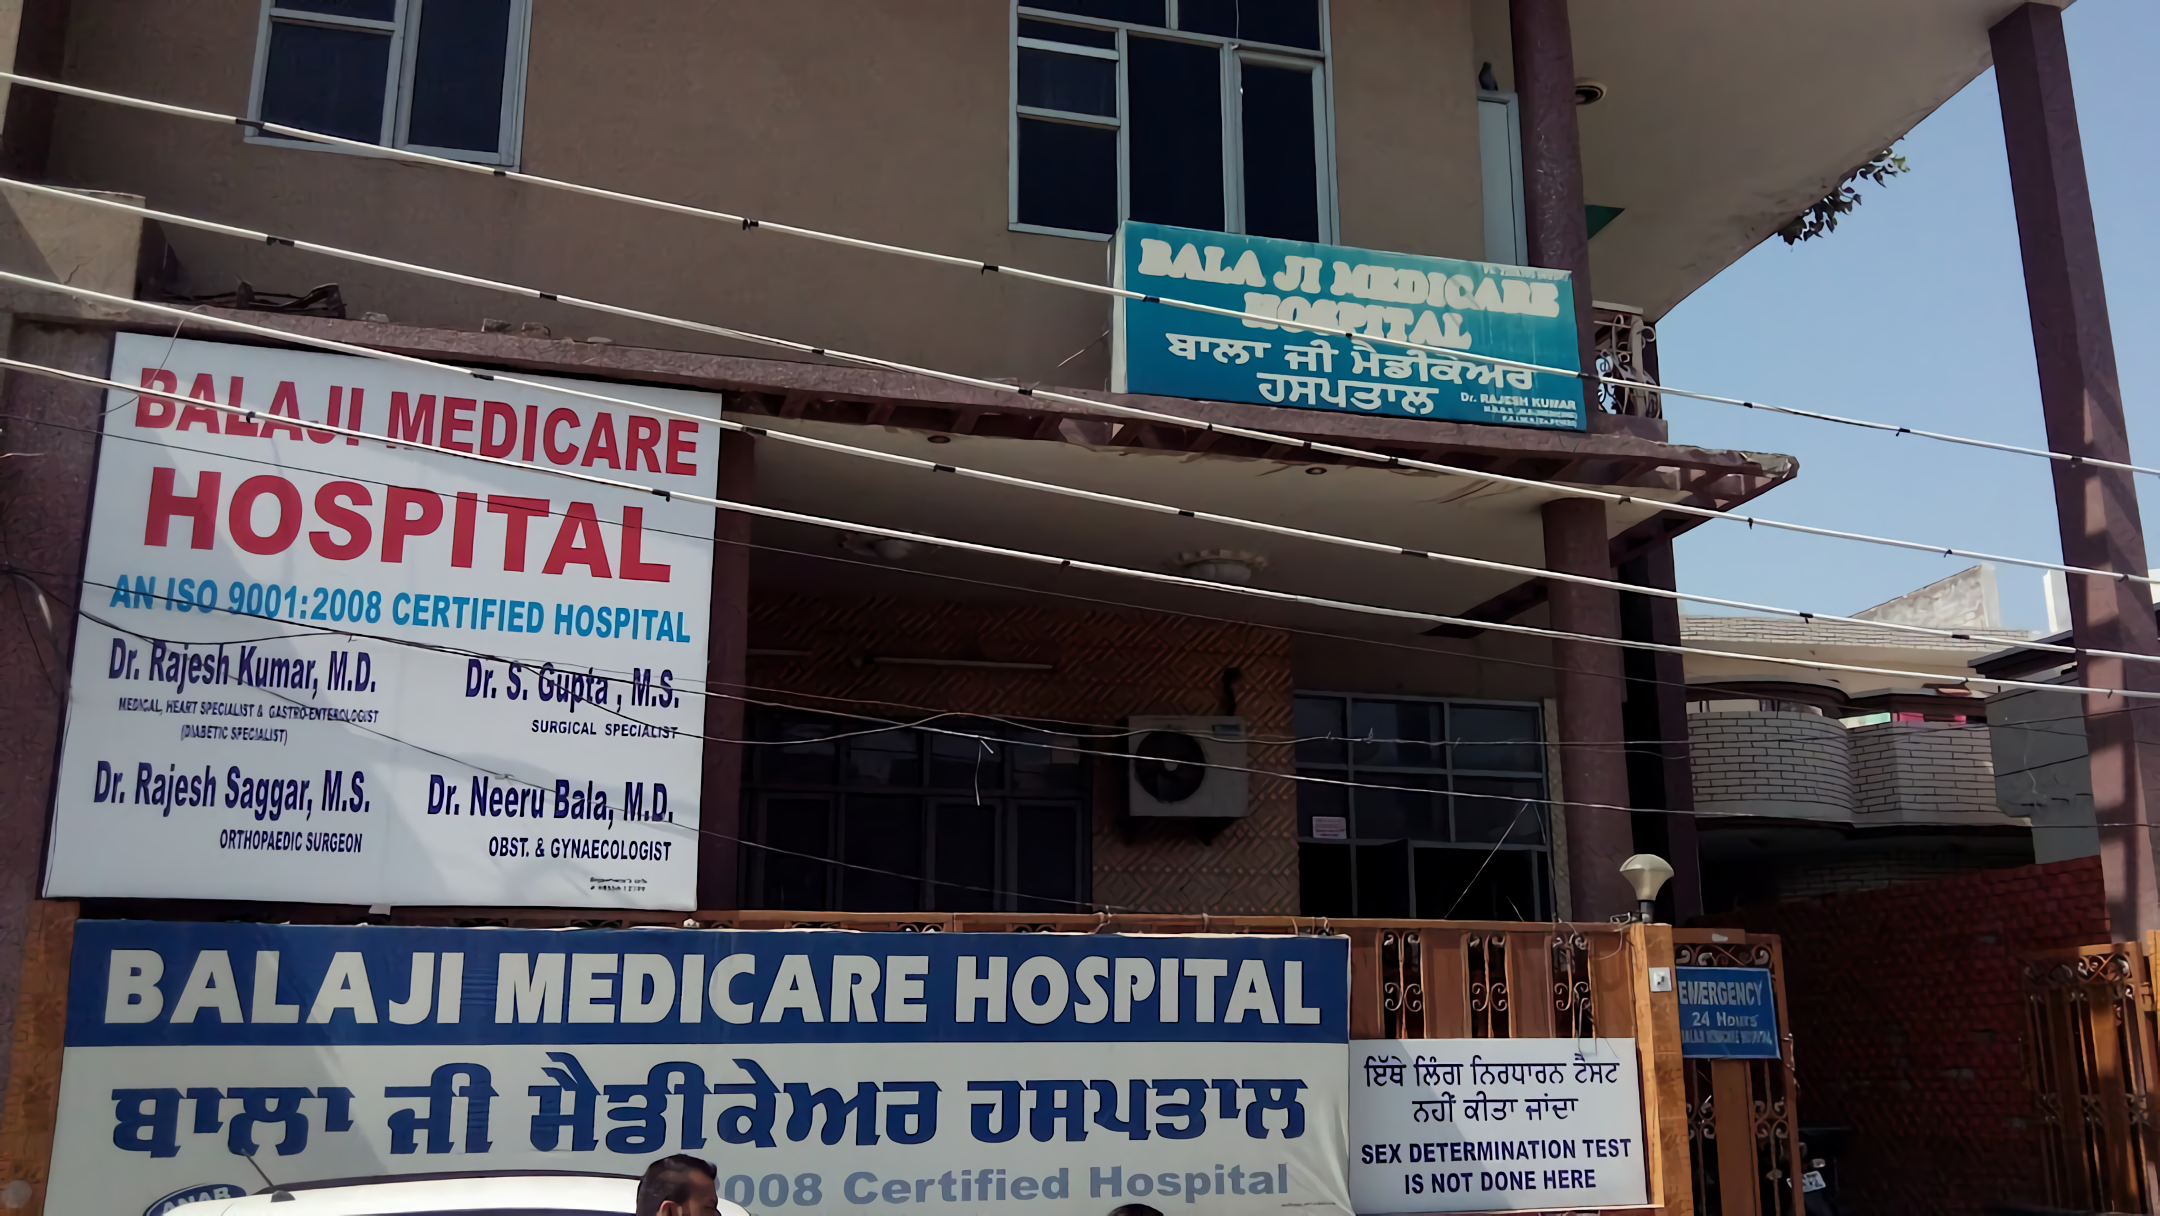 Balaji Medicare Hospital